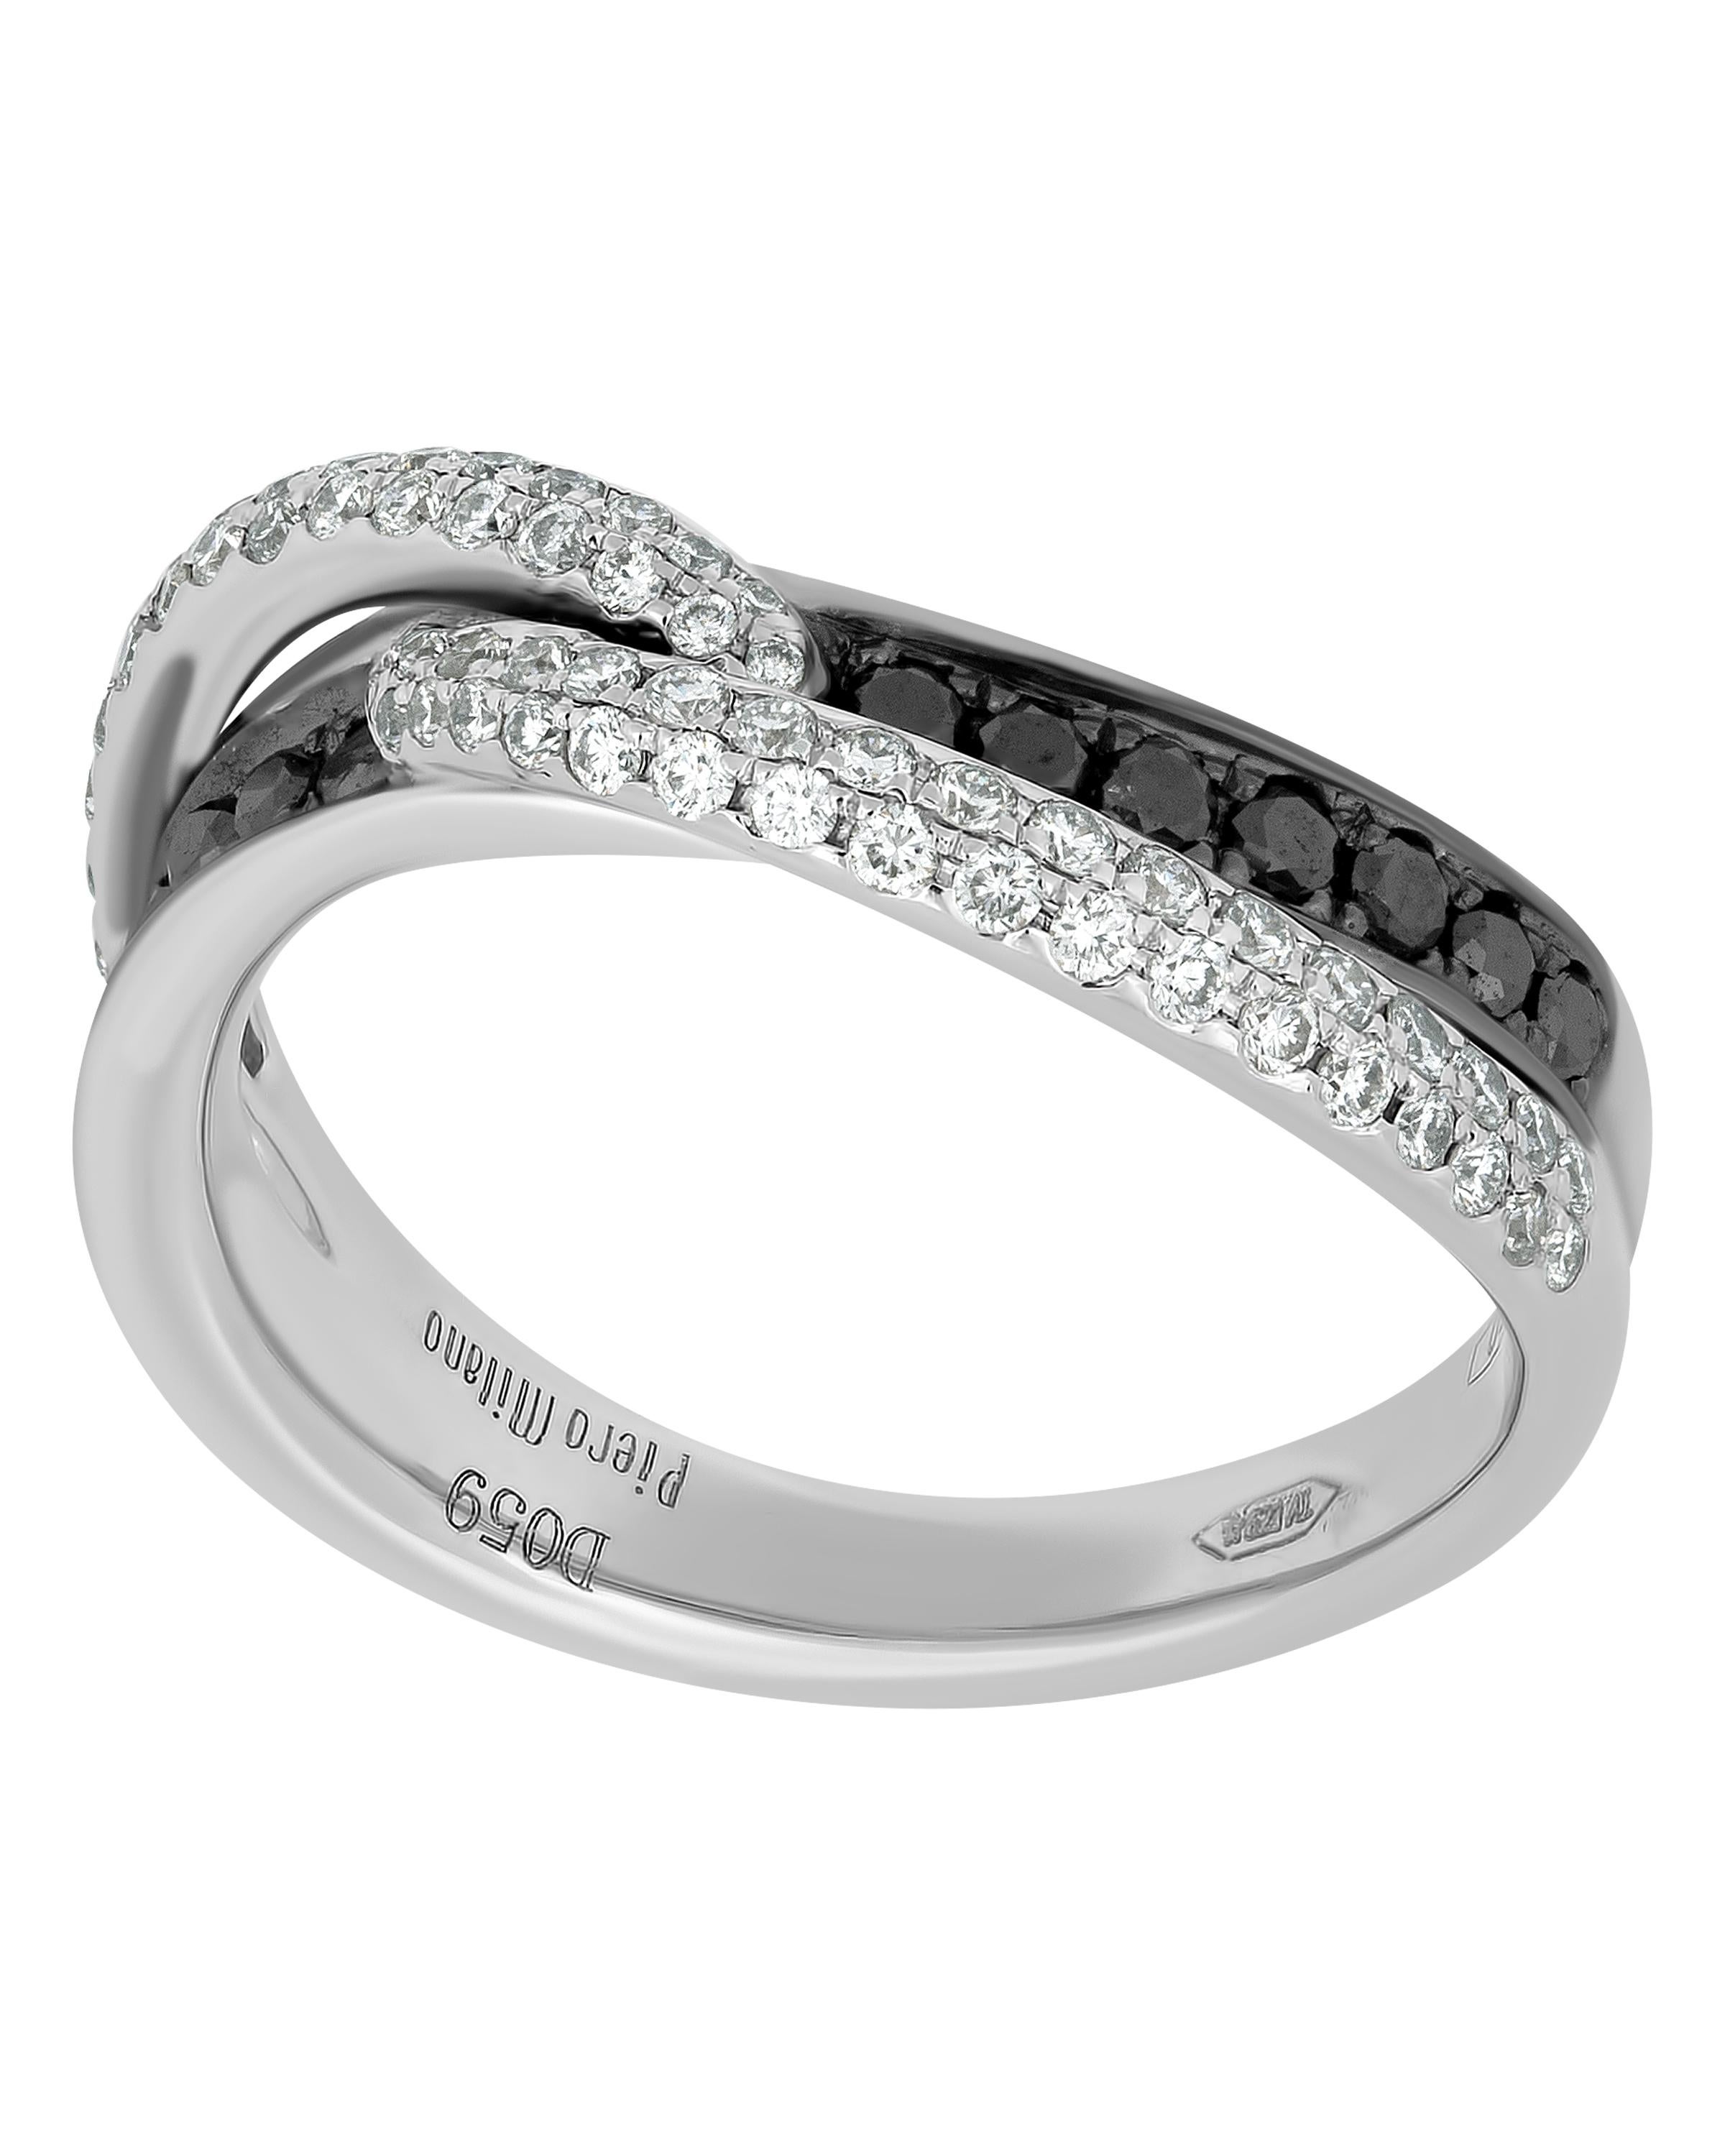 Contemporary Piero Milano 18K White Gold Diamond Ring Sz 6 For Sale